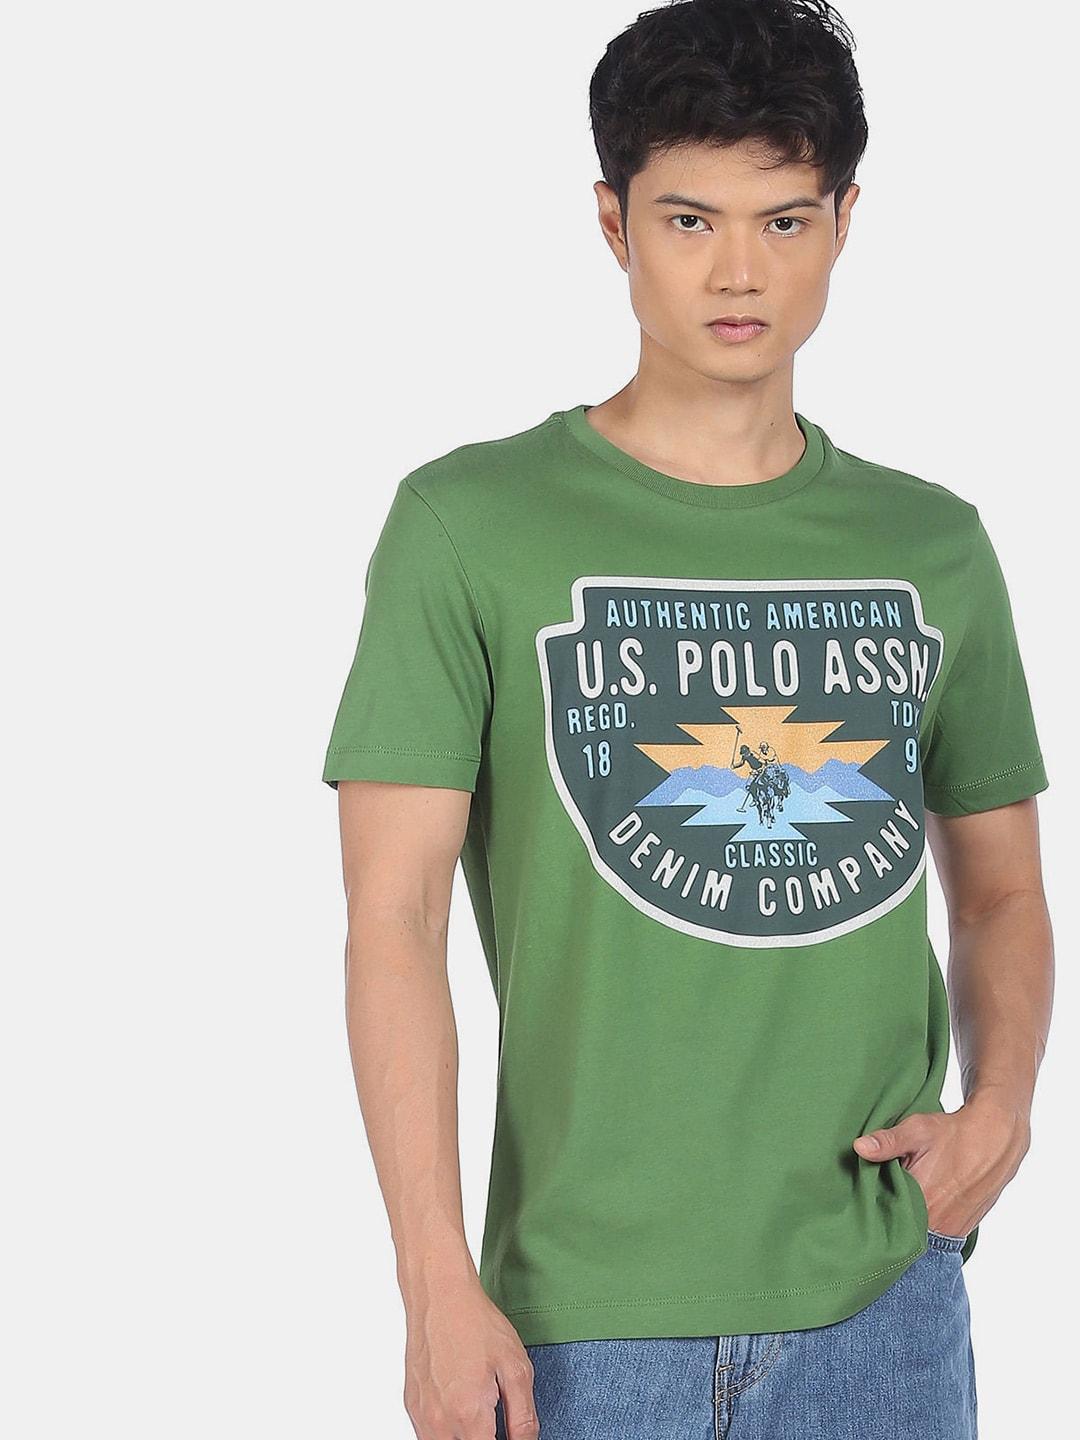 U.S. Polo Assn. Denim Co. Men Green Typography Printed Cotton T-shirt